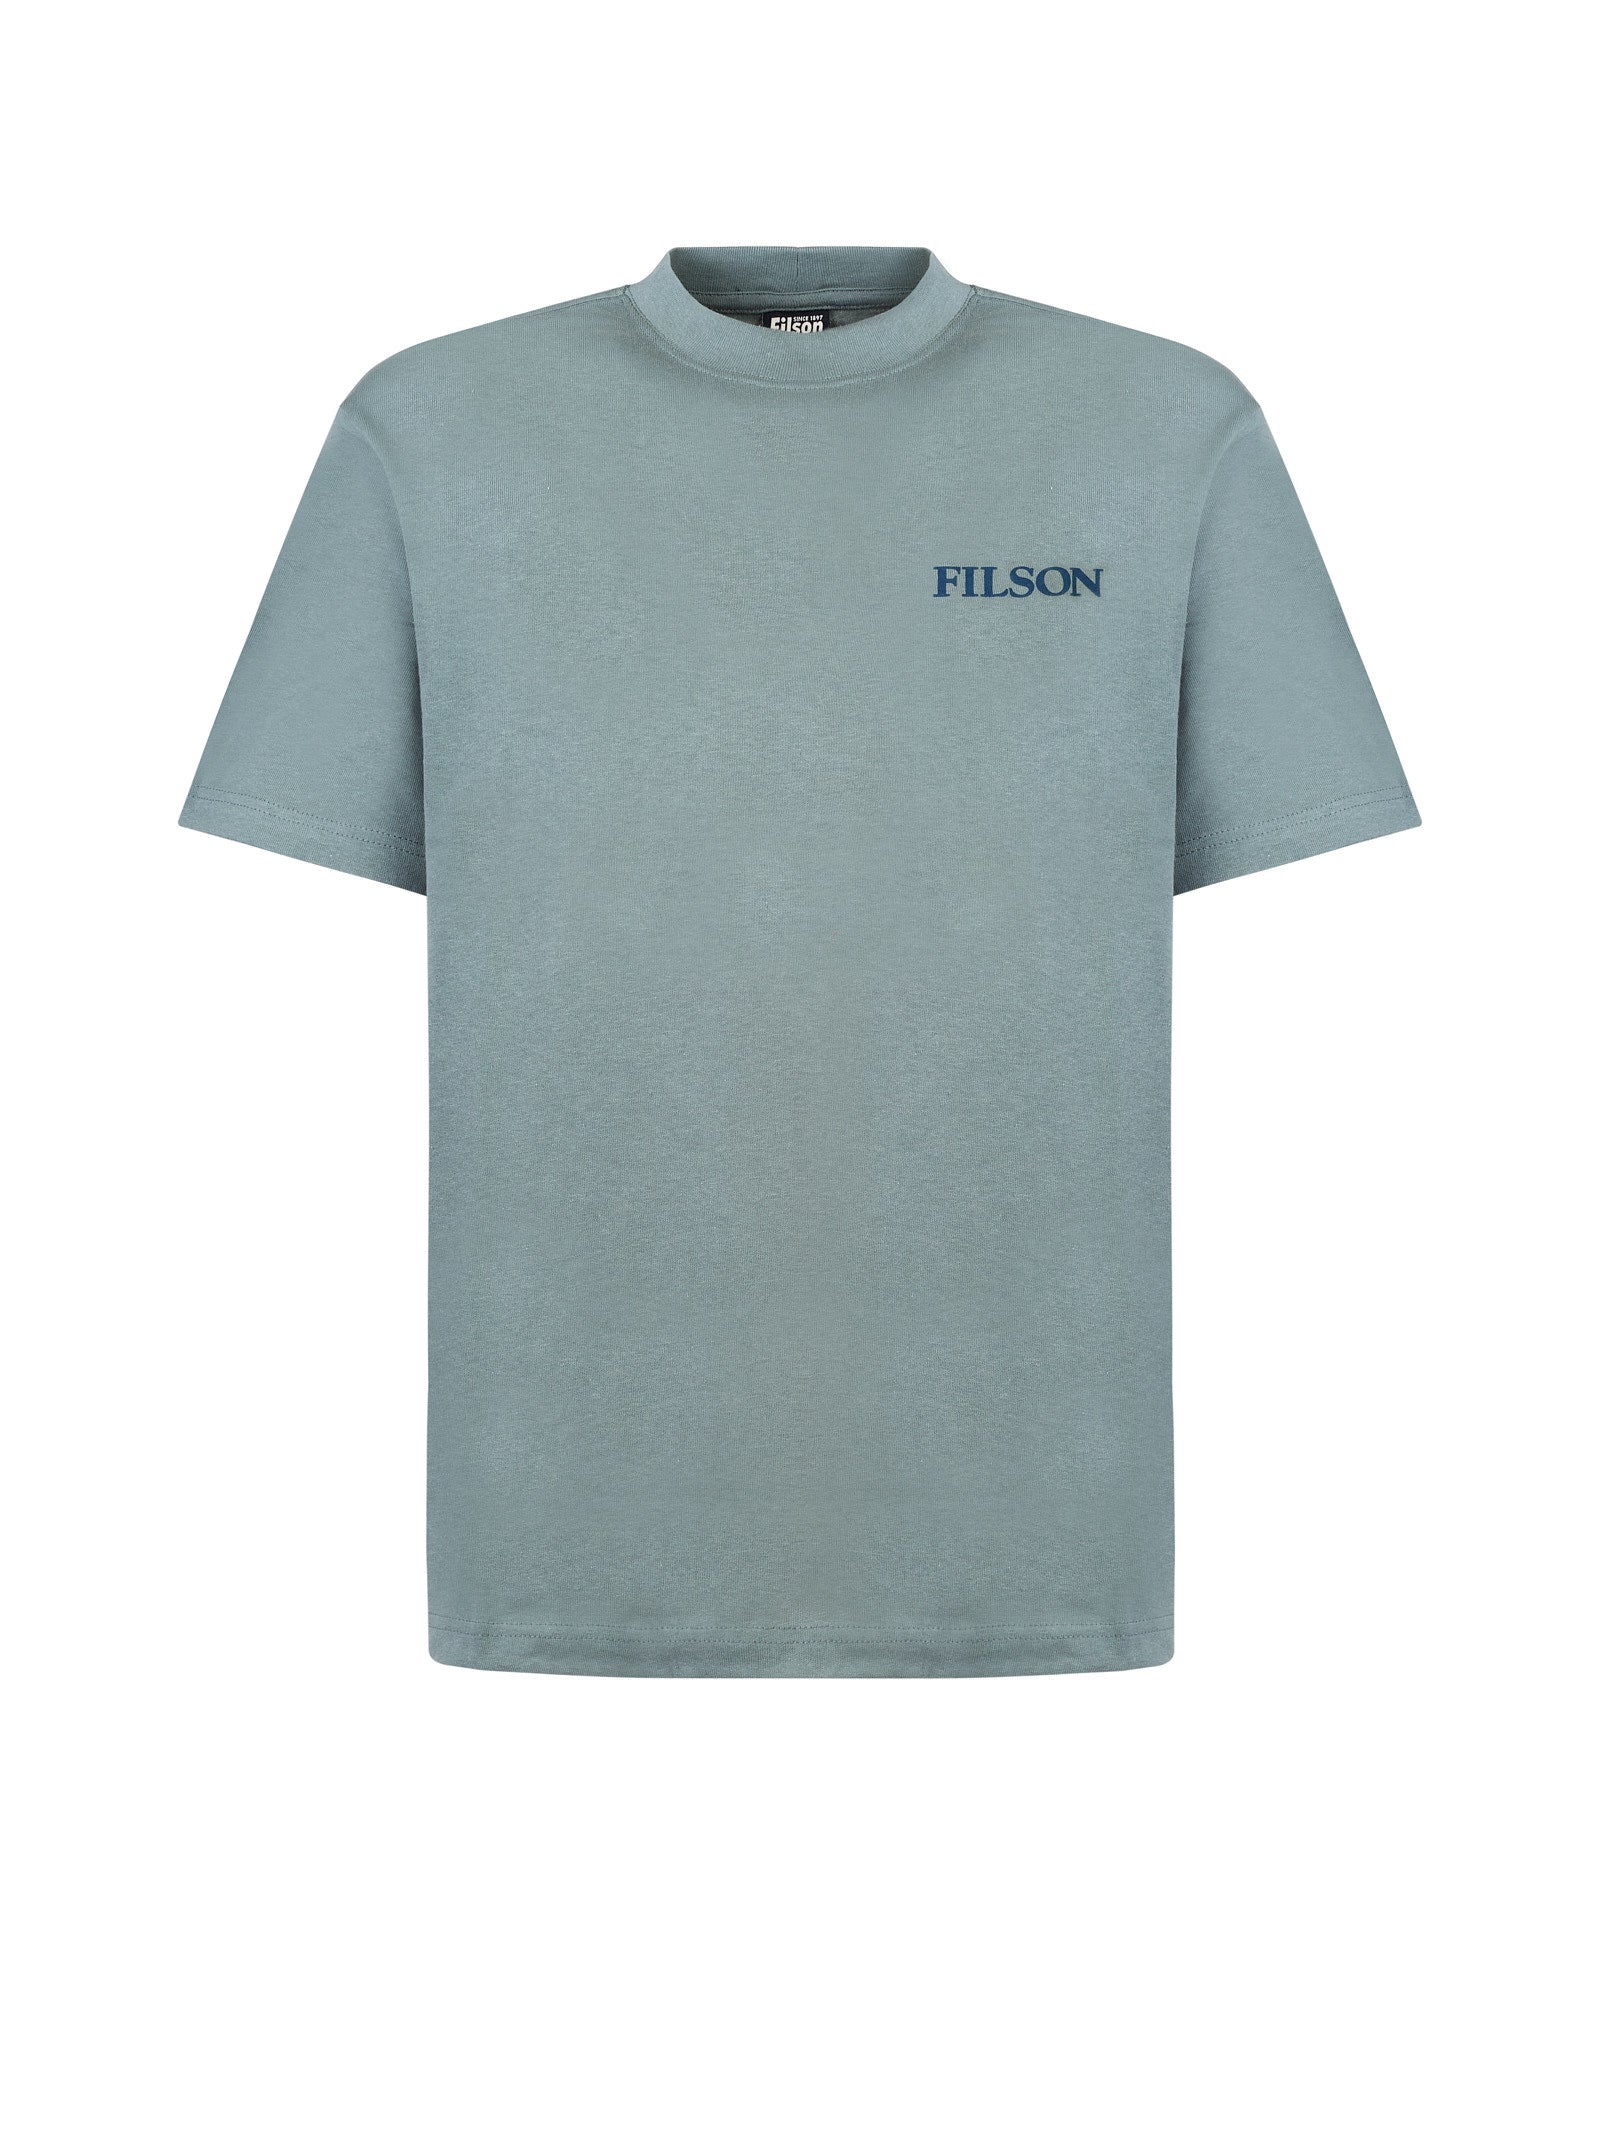 T-shirt FILSON
Petrolio